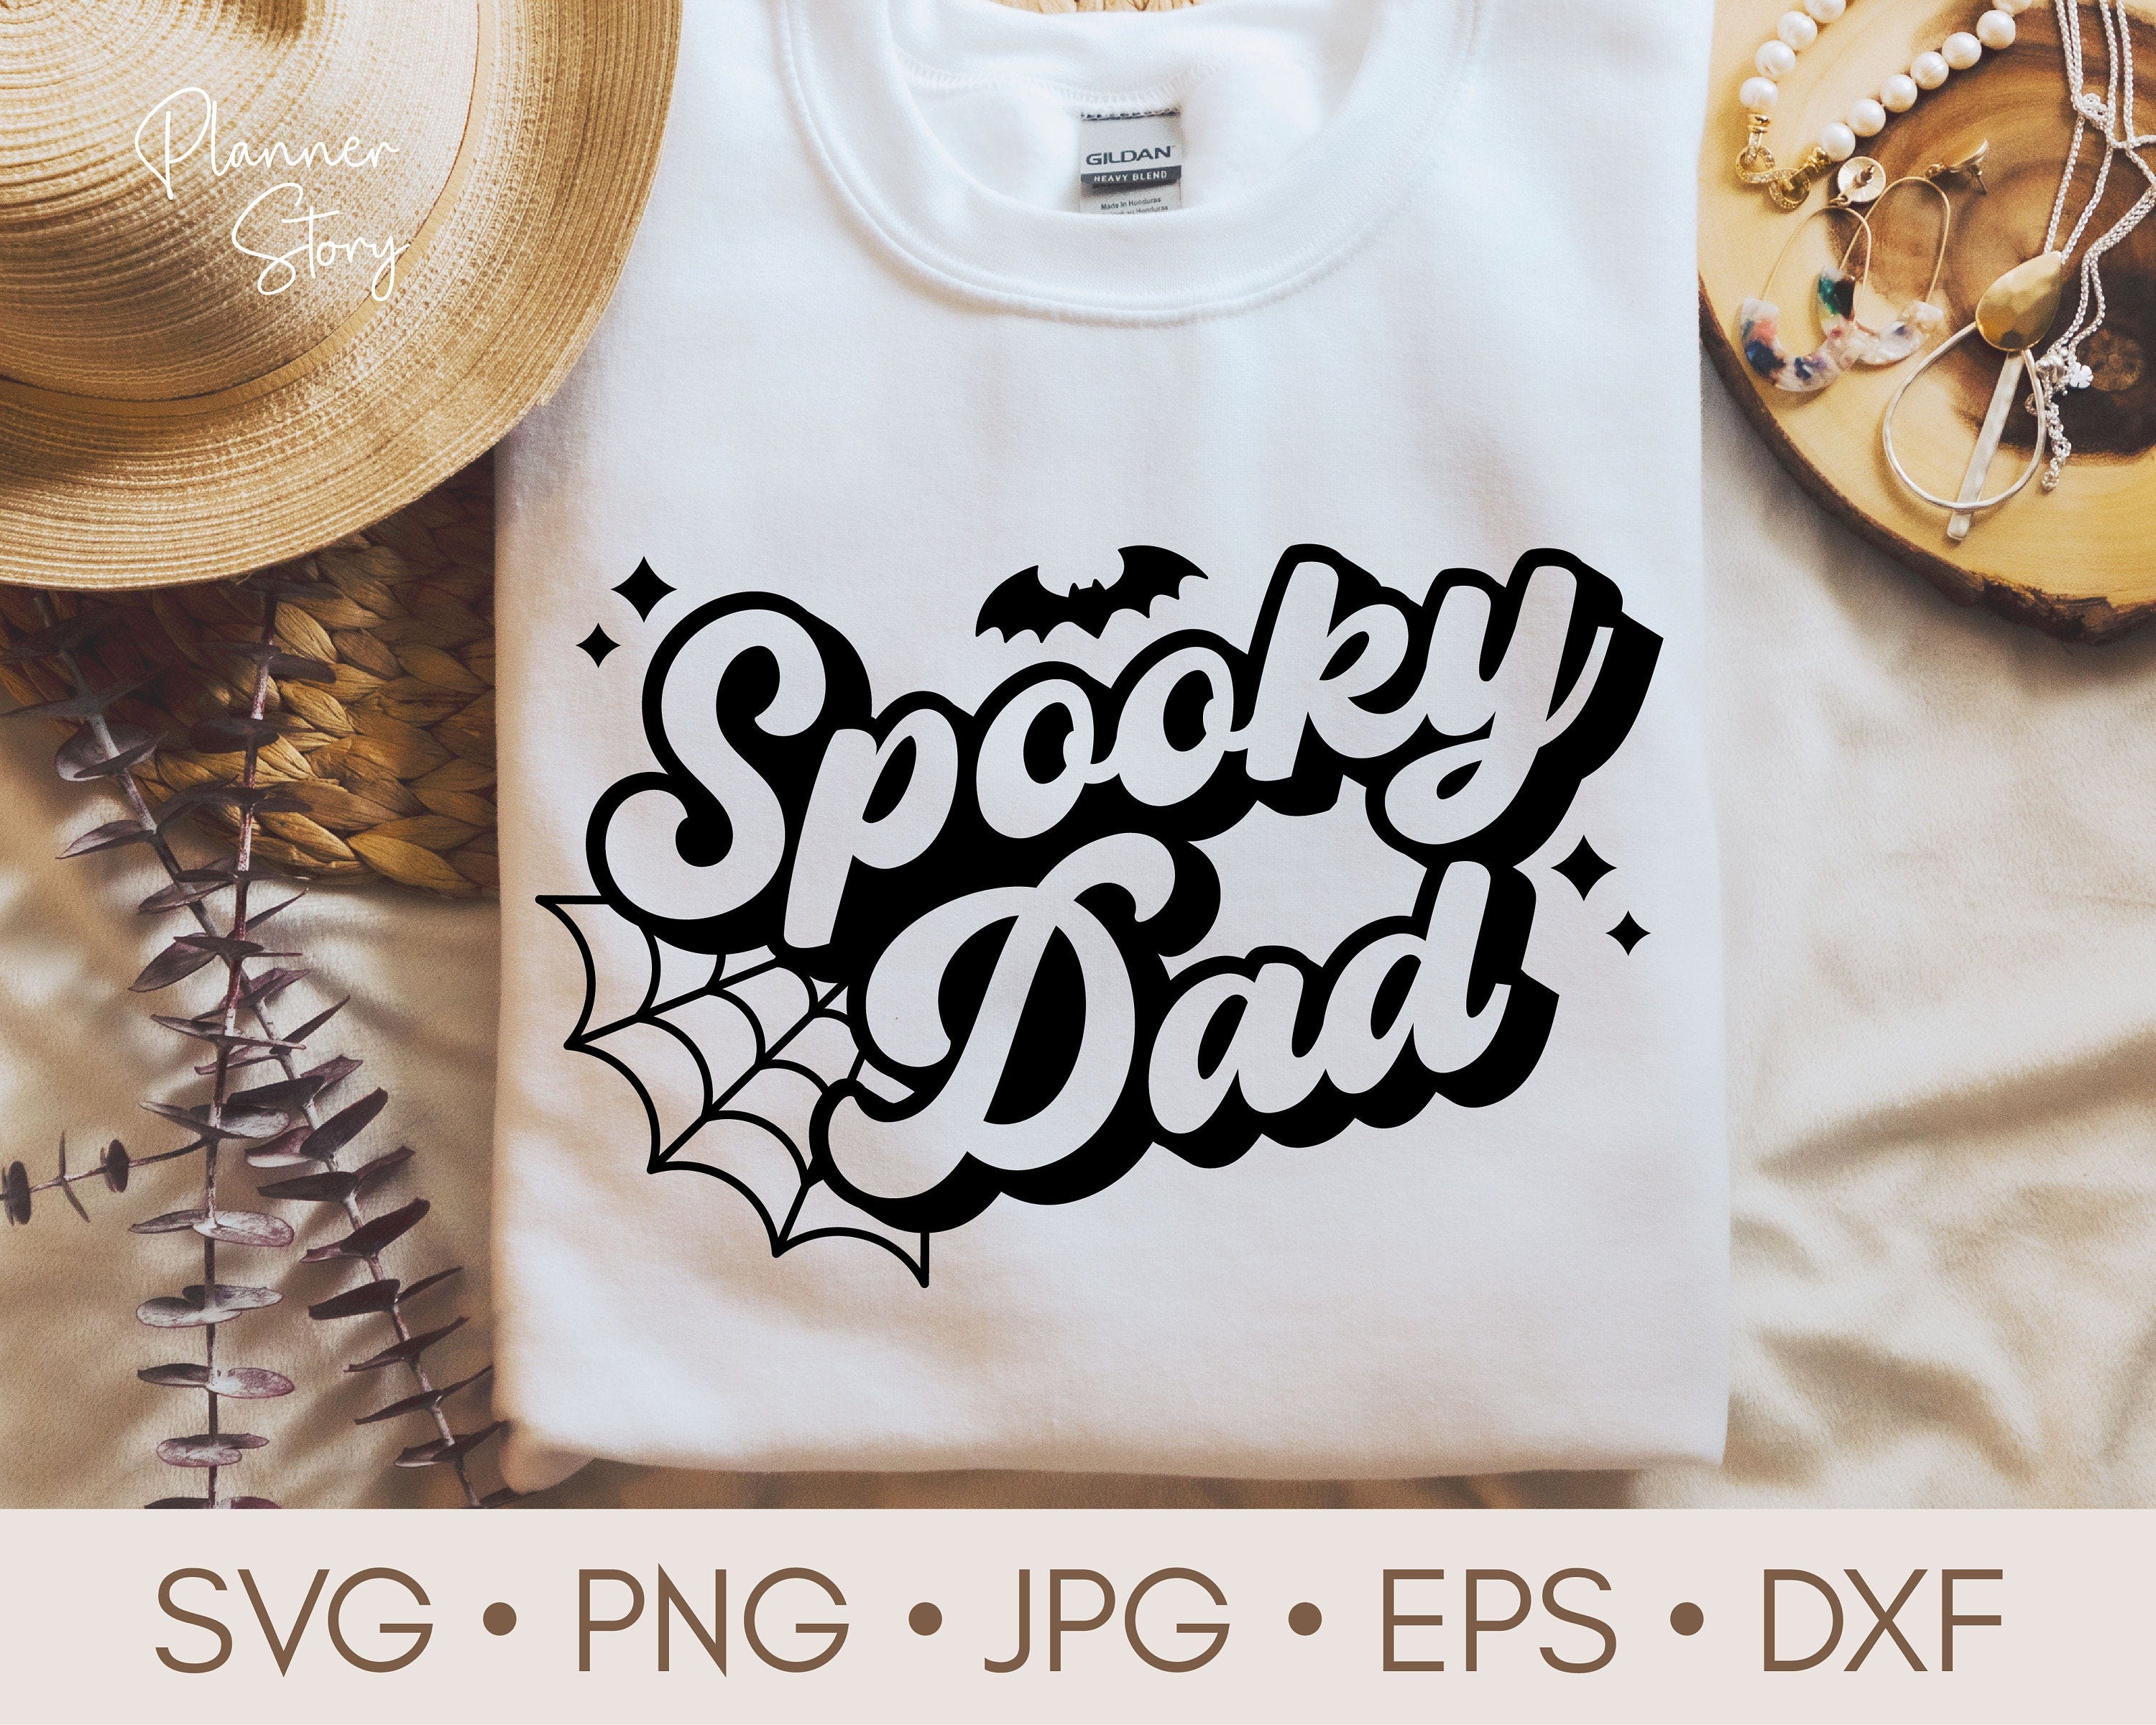 Spooky Dad Svg, Halloween Svg, Halloween Dad Svg Halloween Retro Svg, Dad Life Svg, Spooky Shirt Svg, Funny Halloween Shirt Svg Cut File